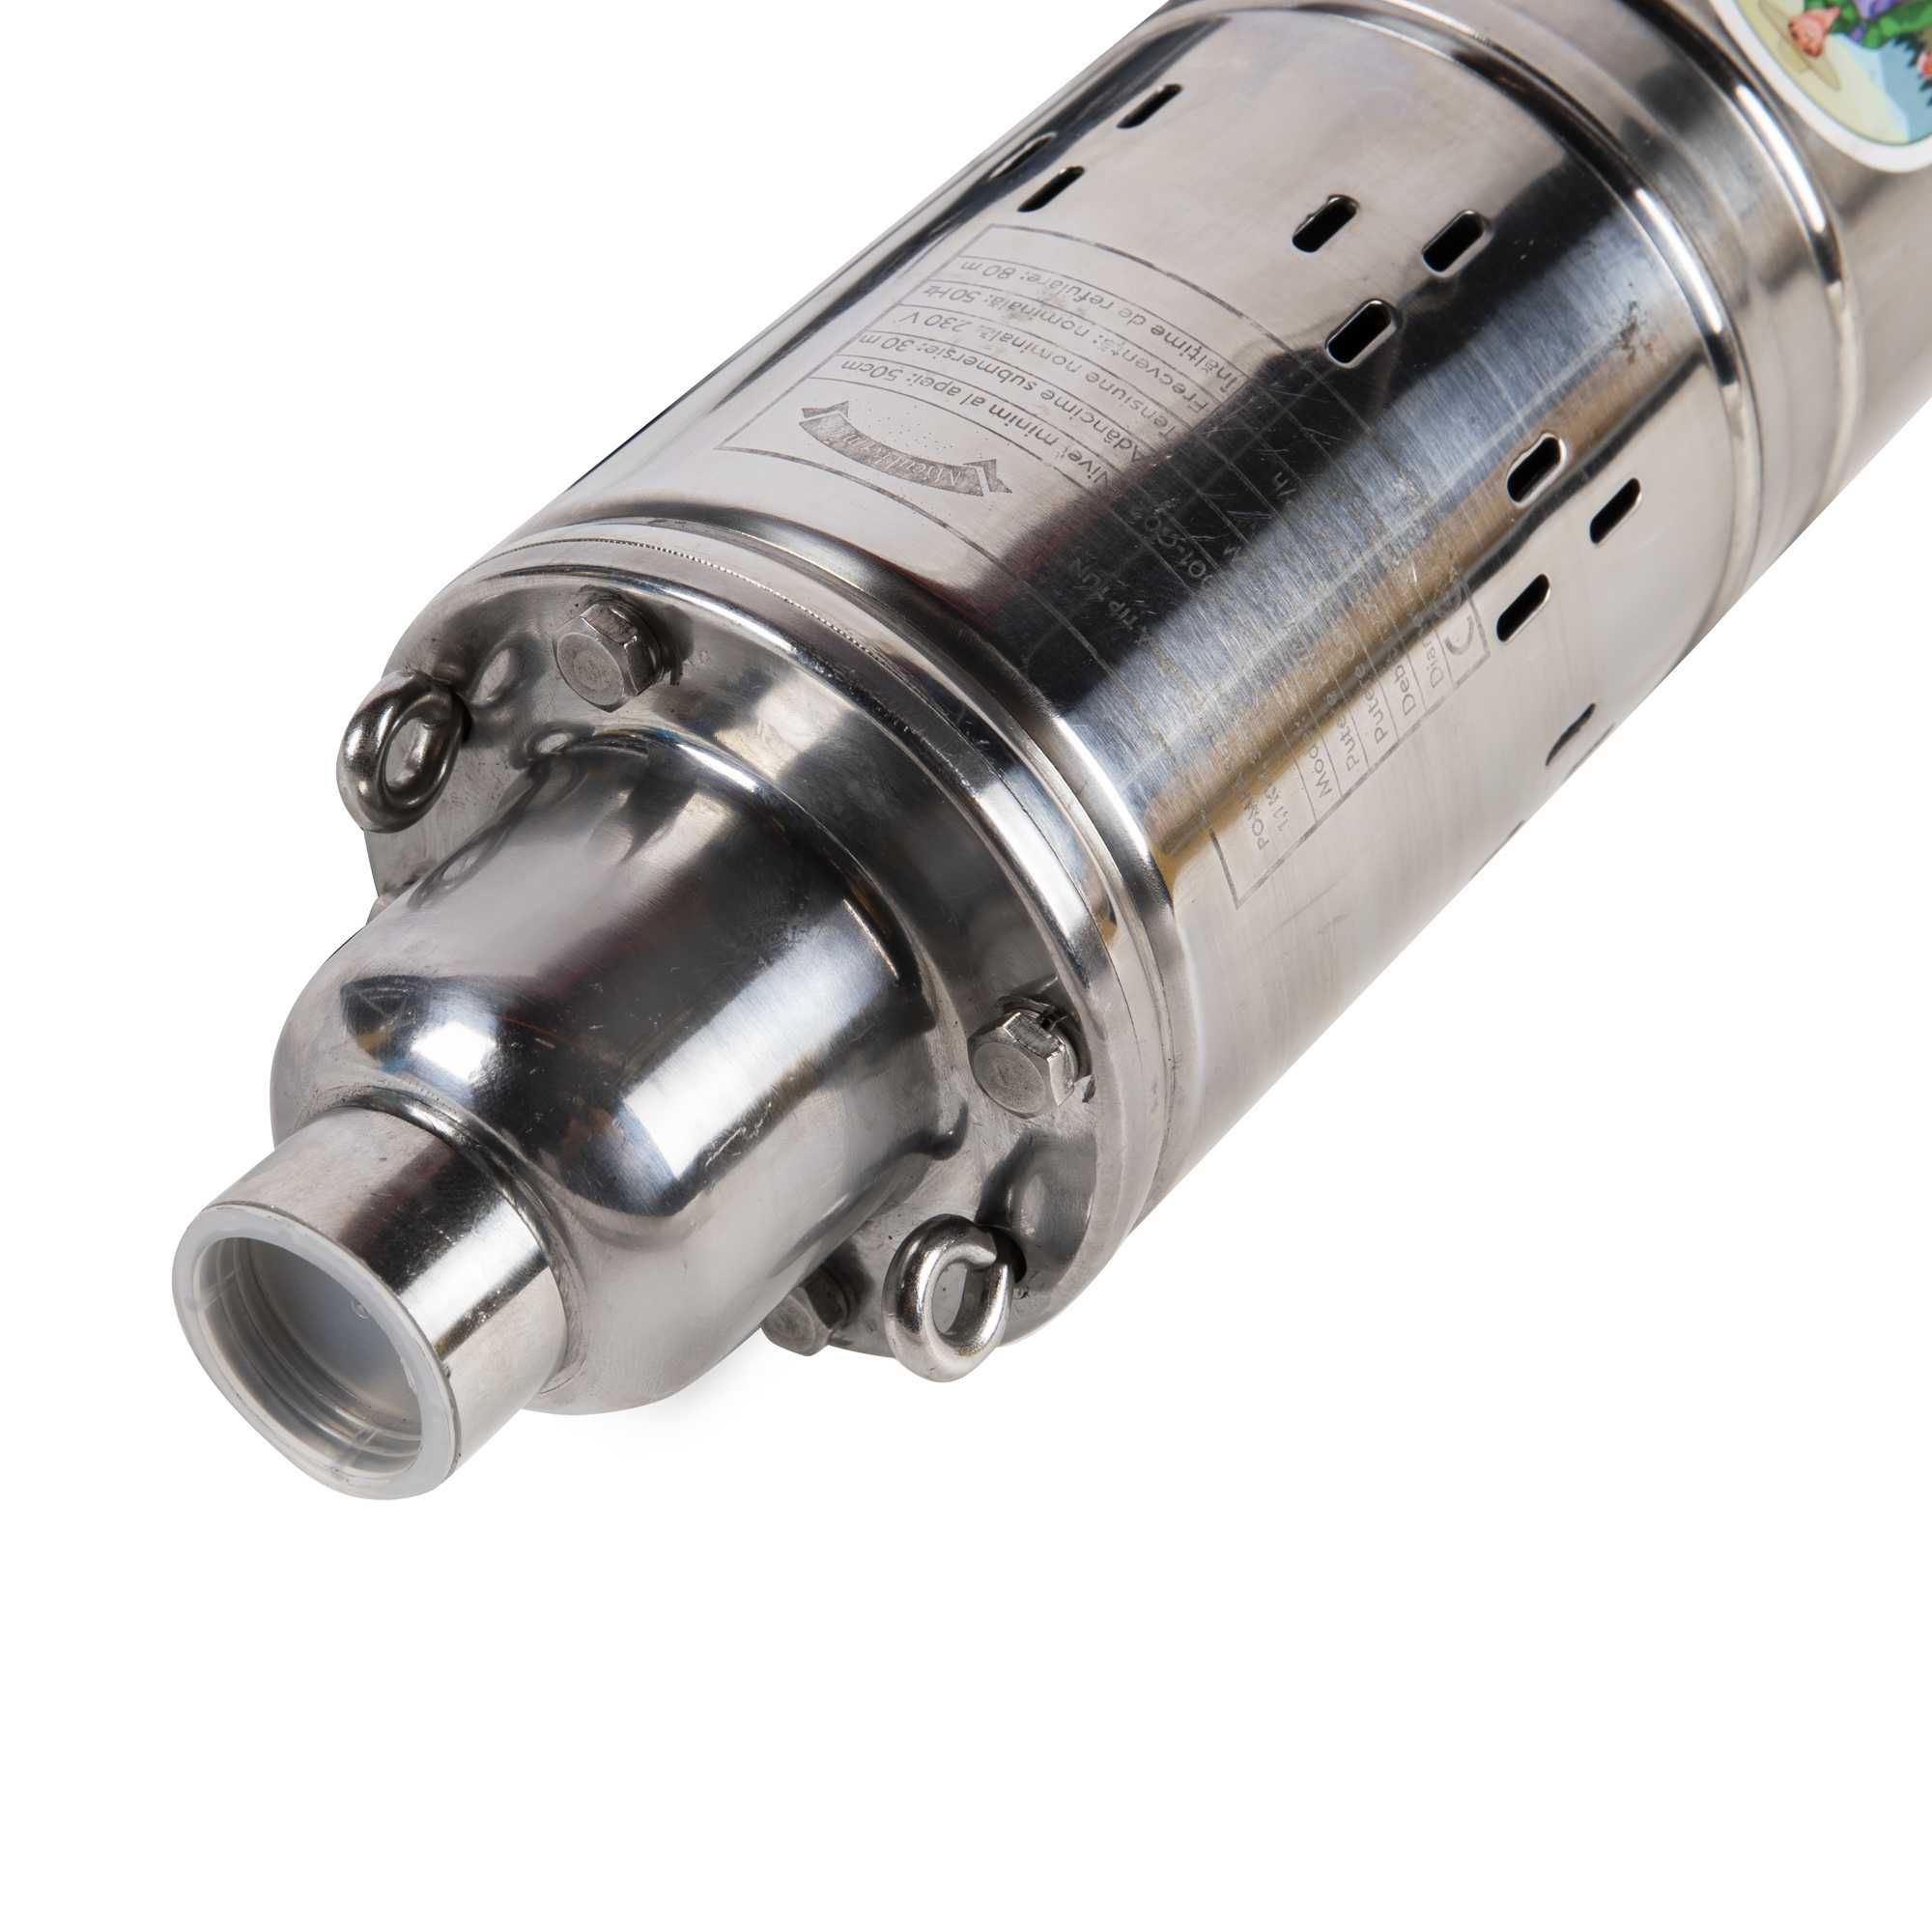 Pompa submersibila apa curata – 3.6 mc/h – MICUL FERMIER – 1 tol/1100W